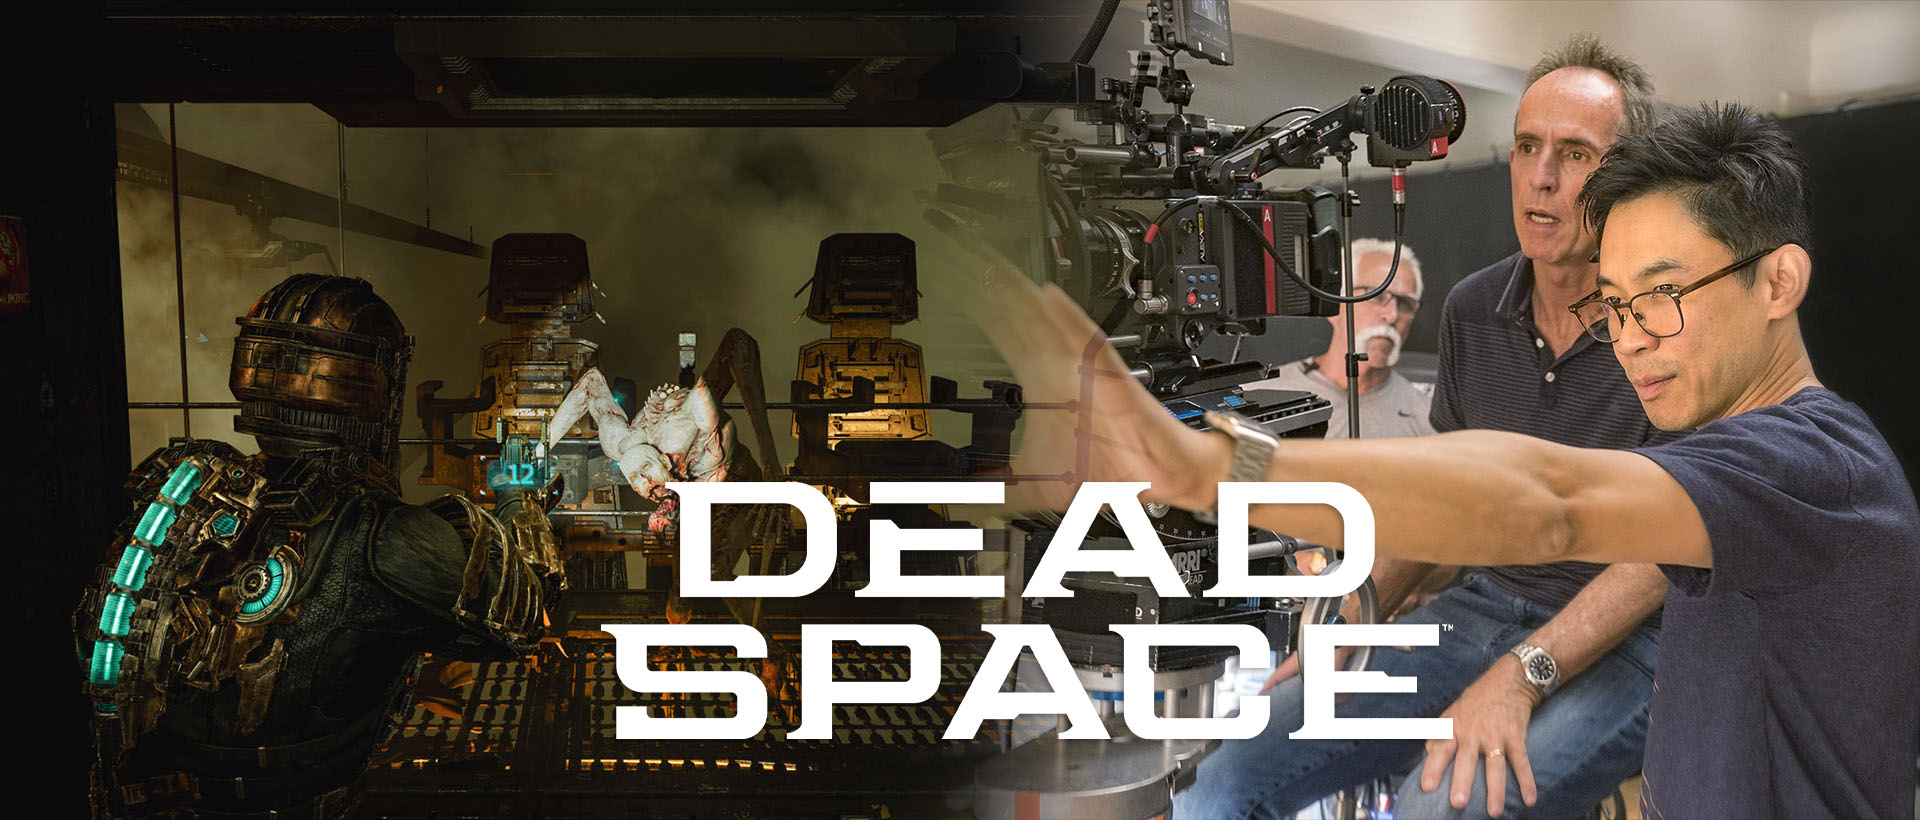 RUMOR: Director James Wan In Talks To Helm 'Dead Space' For Warner Brothers  - Knight Edge Media